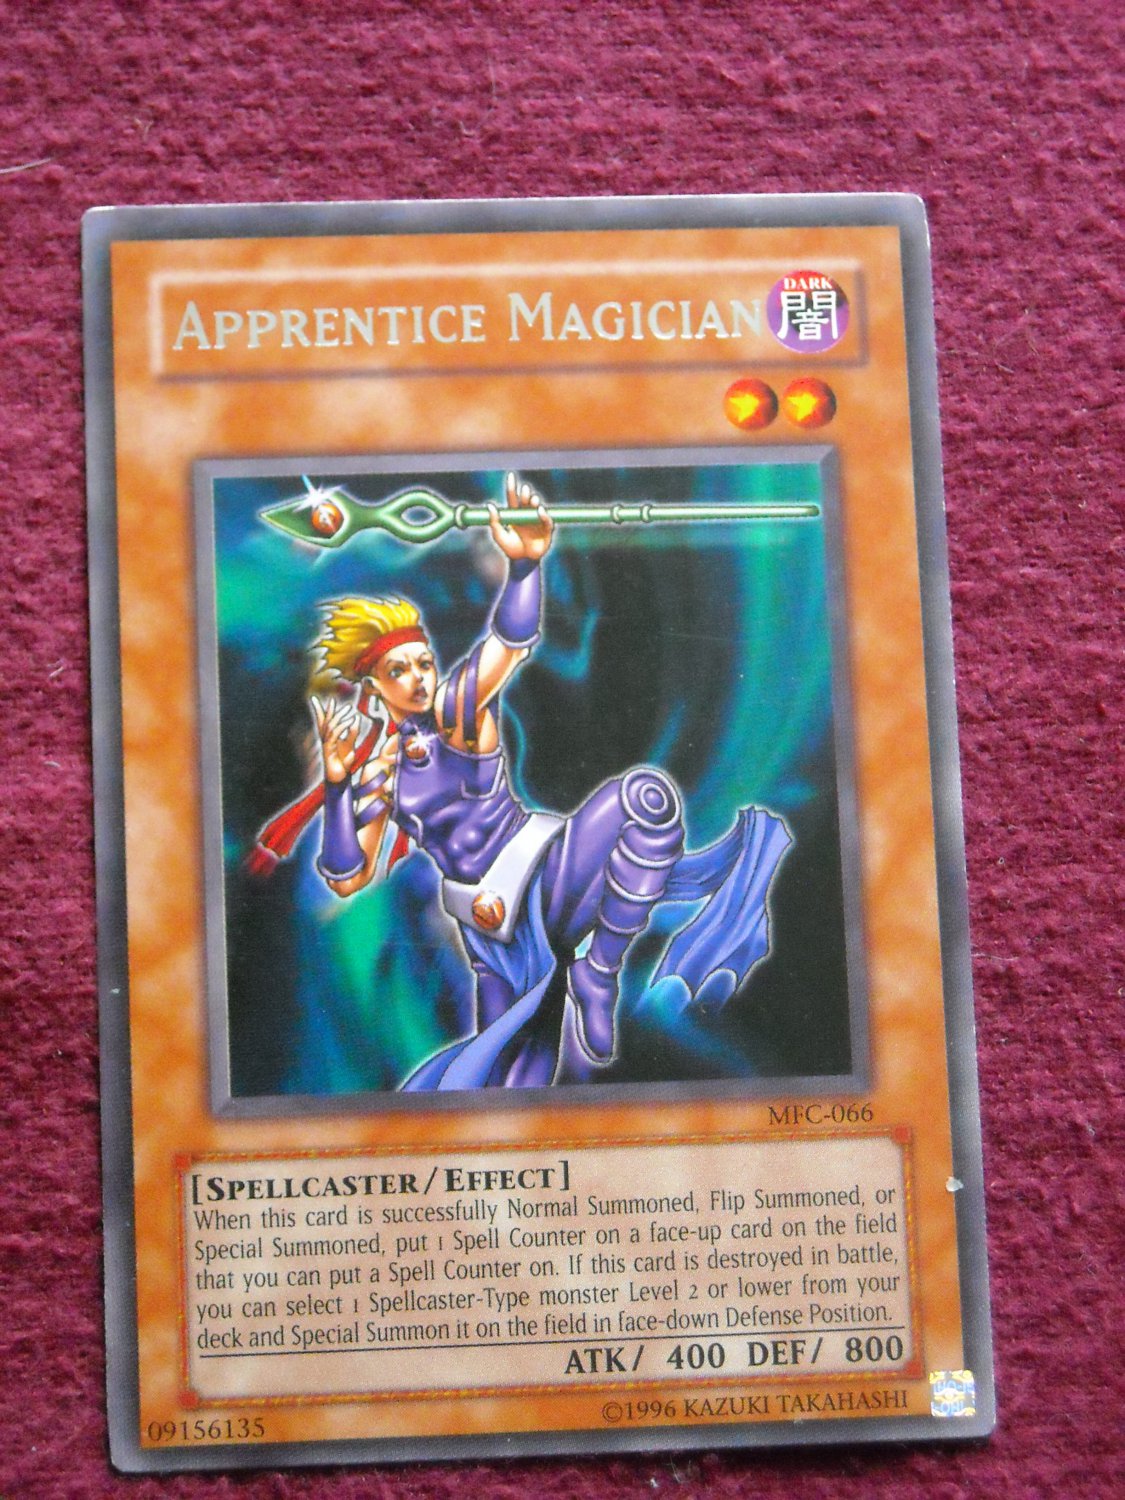 Spellcaster Yu Gi Oh Apprentice Magician Mfc 066 Spellcaster Effect.